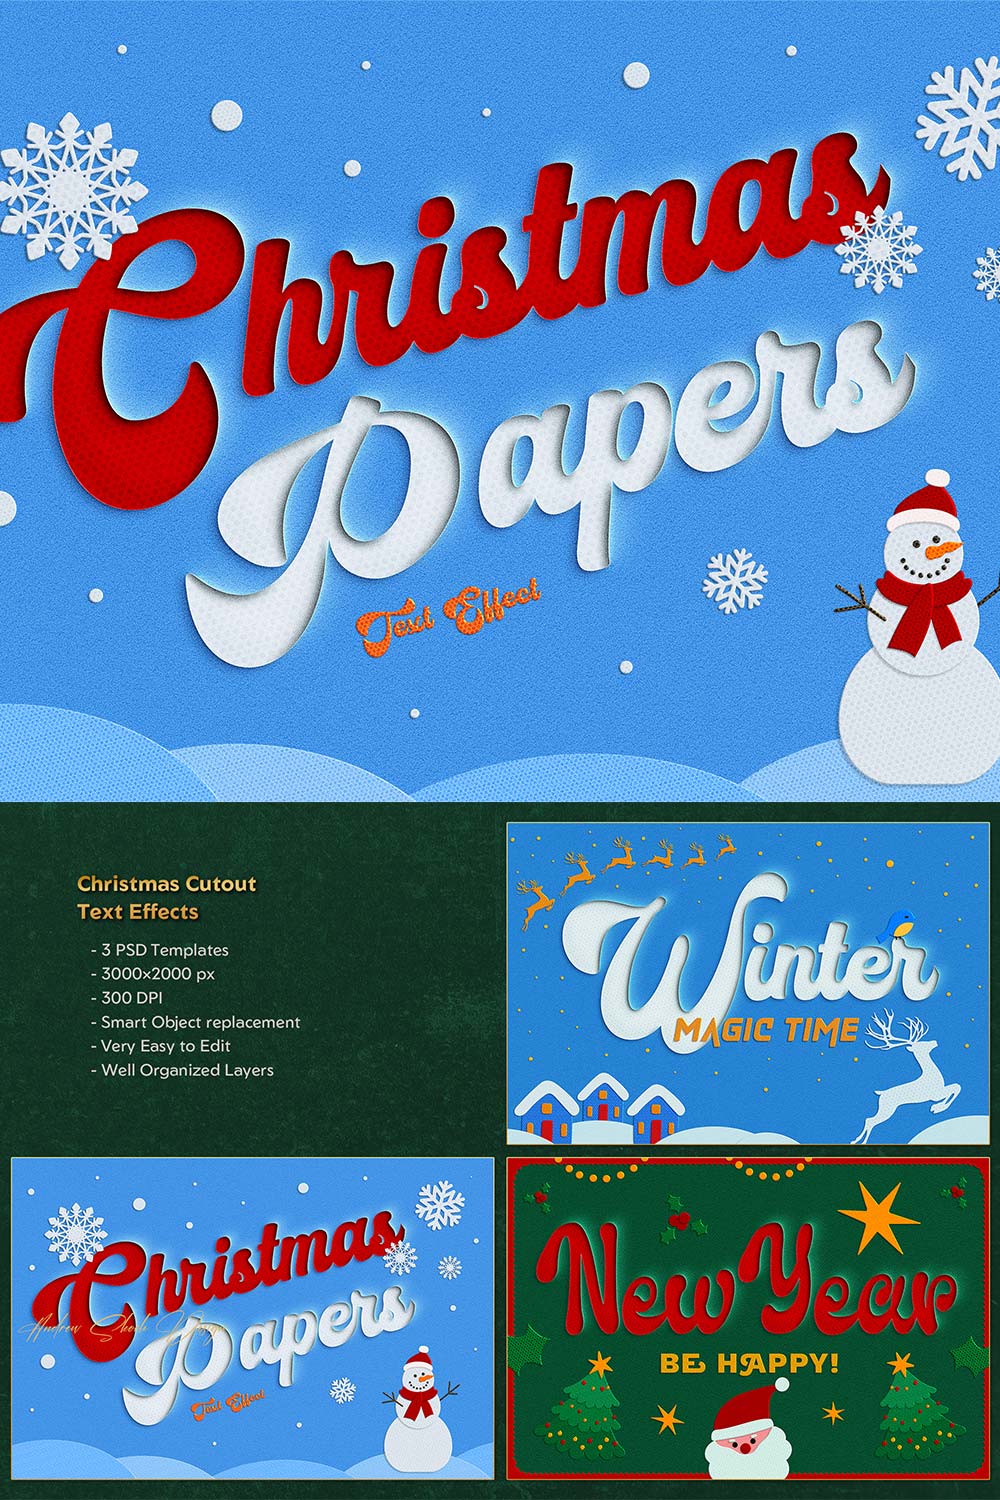 Christmas Paper Cutout Effect pinterest preview image.